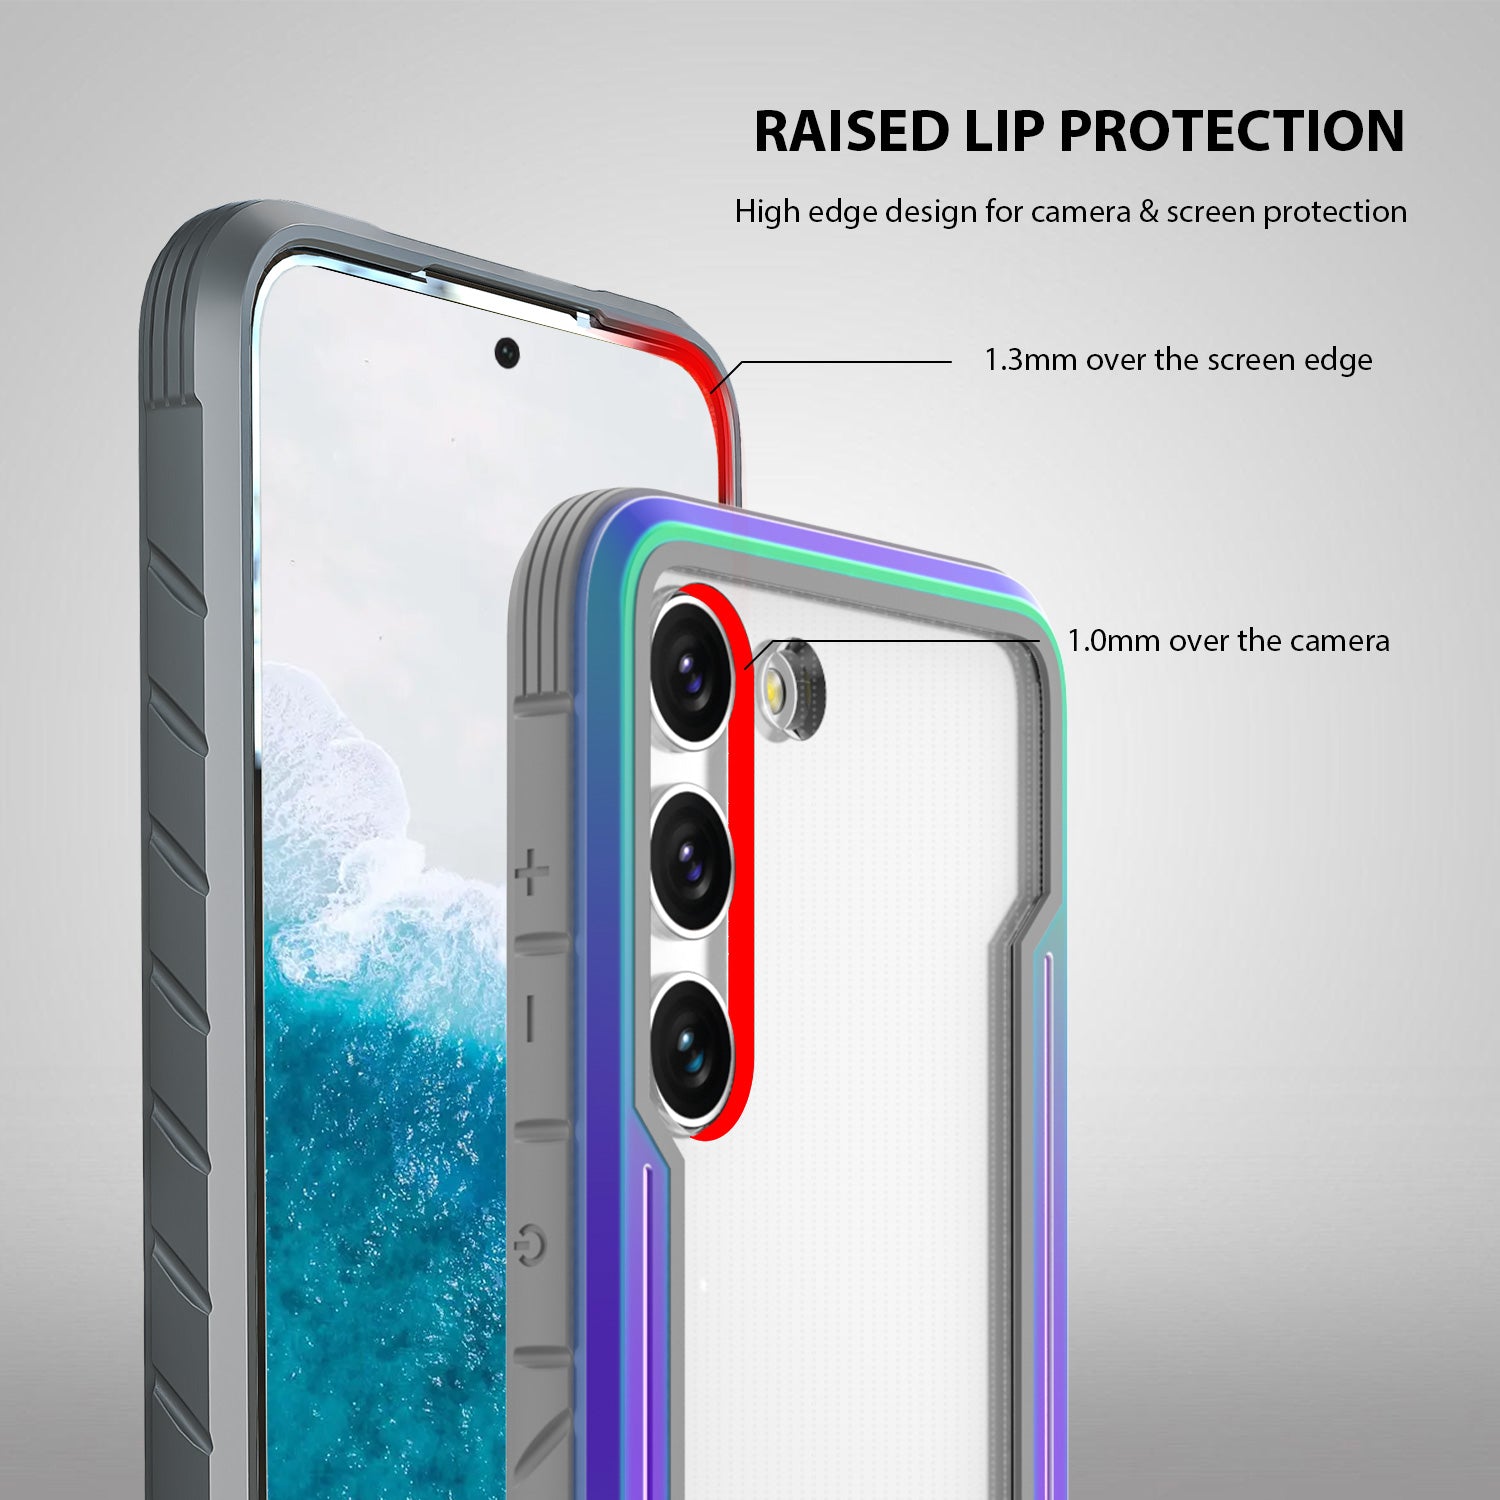 Tough On Samsung Galaxy S23 Plus 5G Case Iron Shield Iridescent